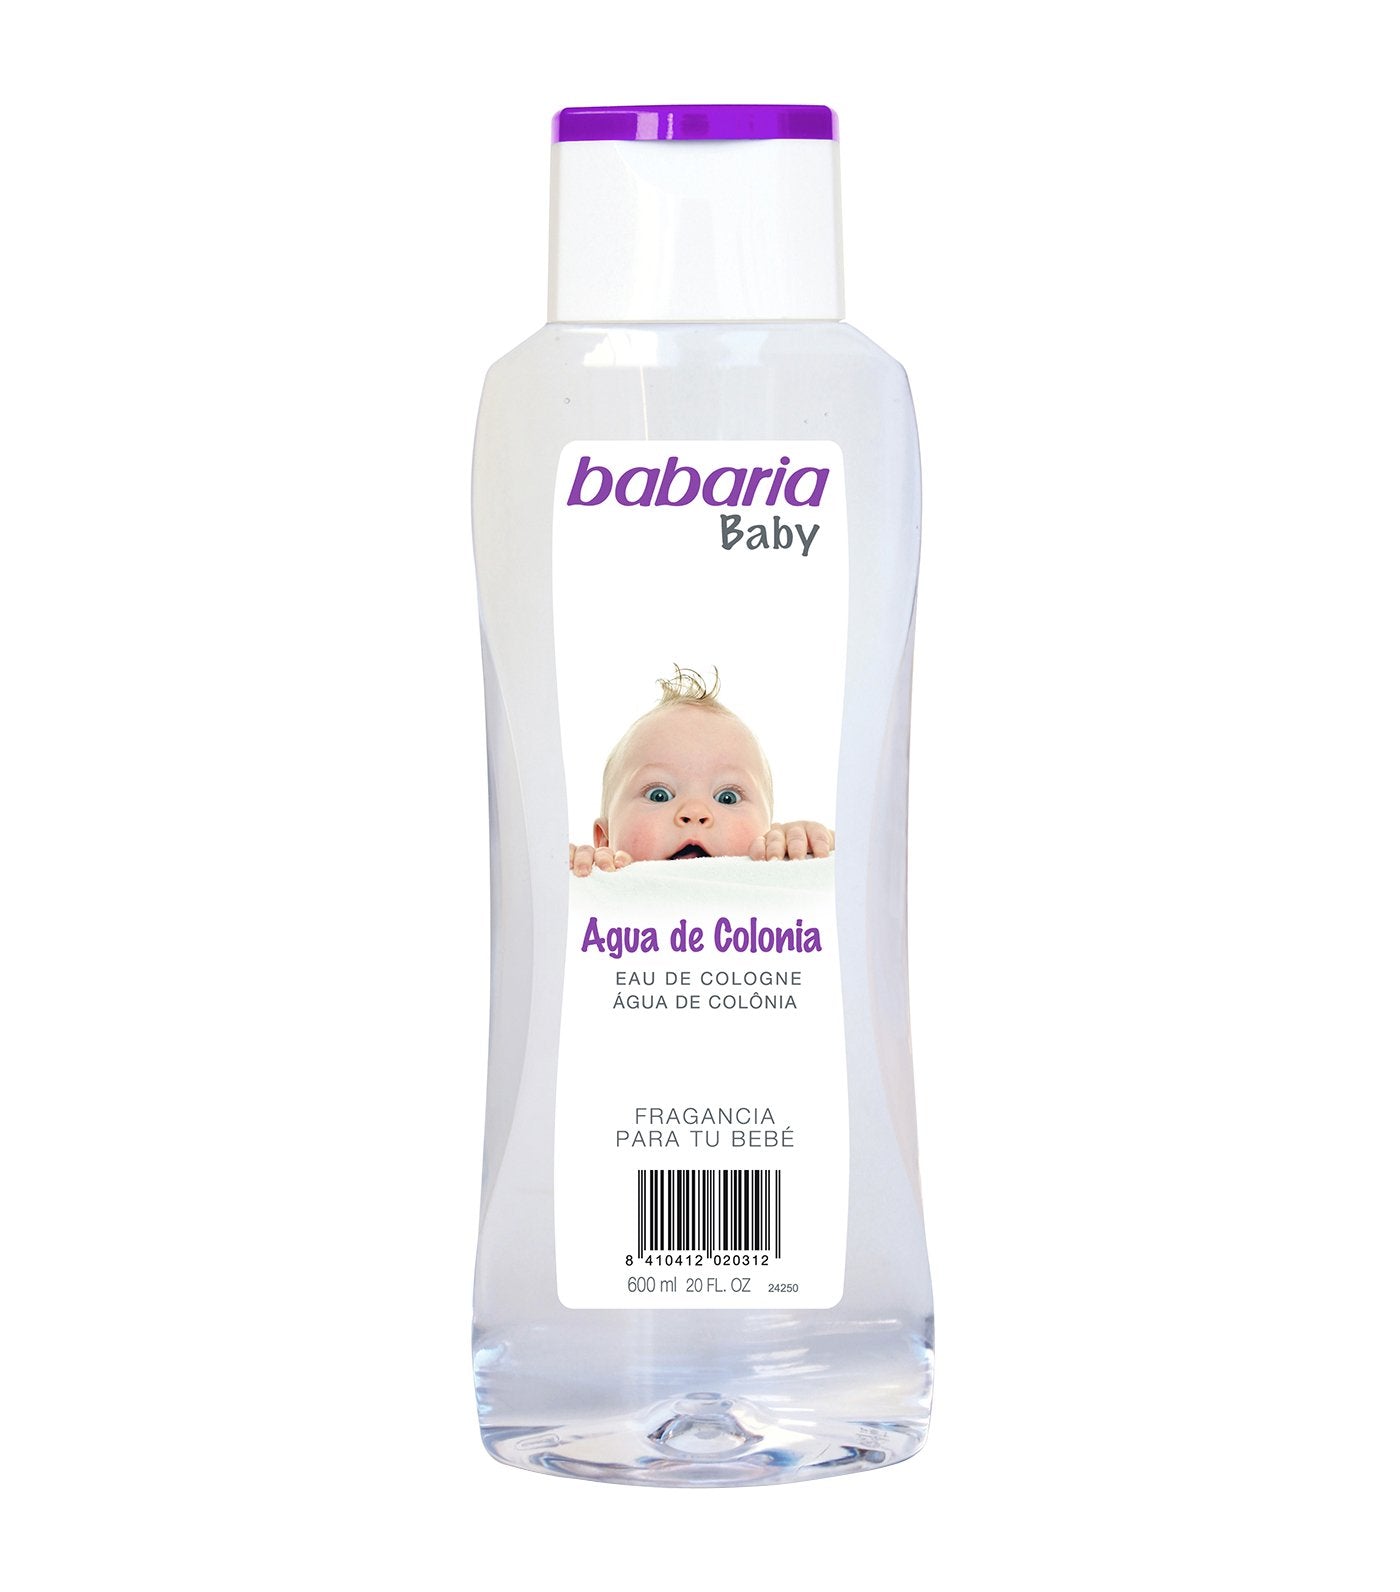 babaria free baby eau de cologne